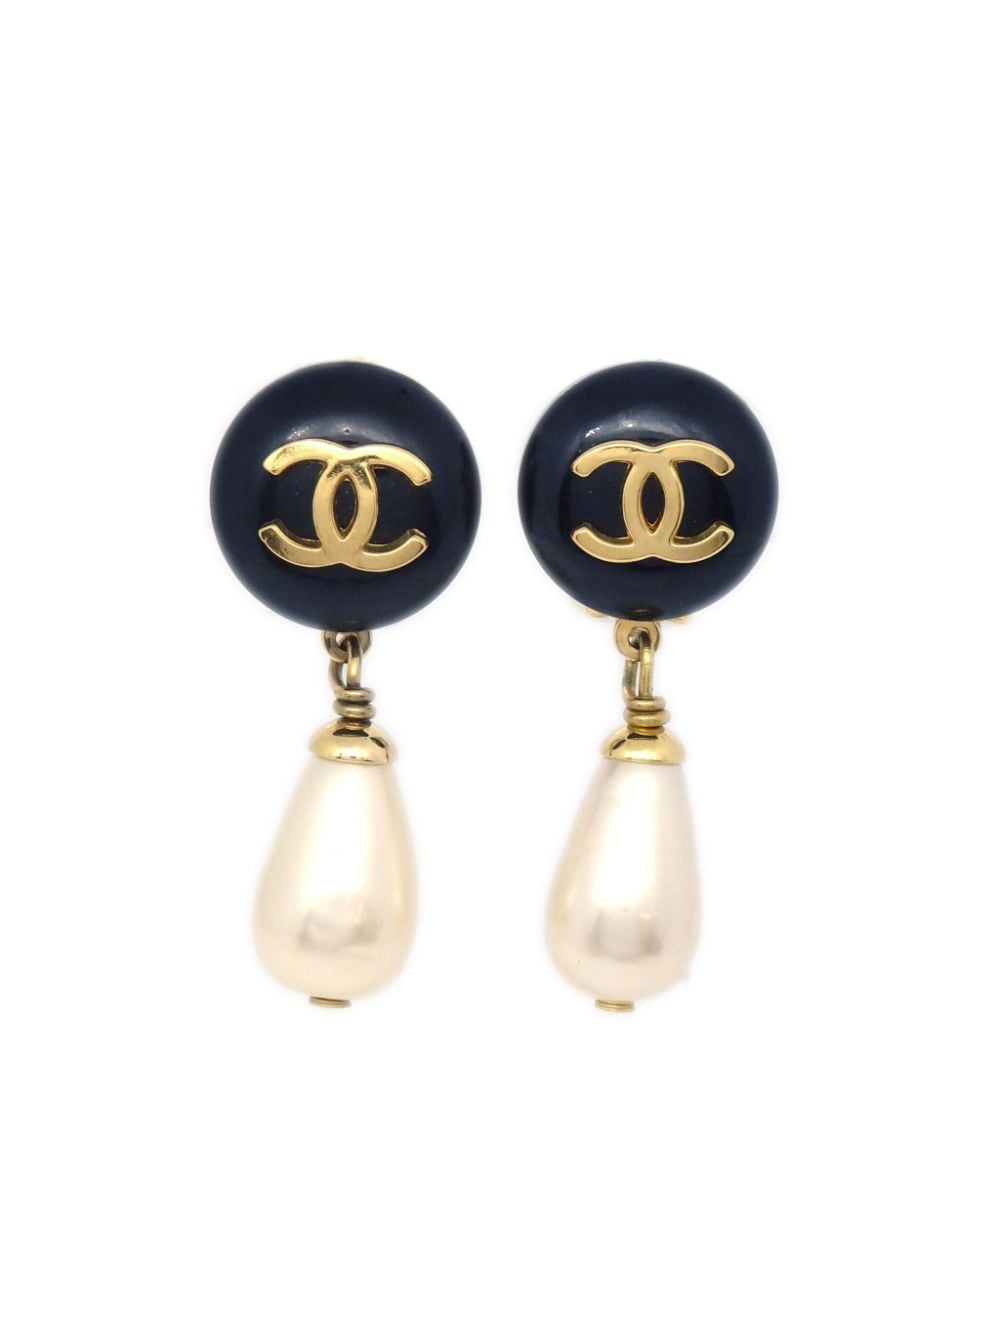 Chanel Earrings, CC Pearl and Crystal with Cha Nel Jacket, Gold Tone, New  in Box GA001 GA003 - Julia Rose Boston